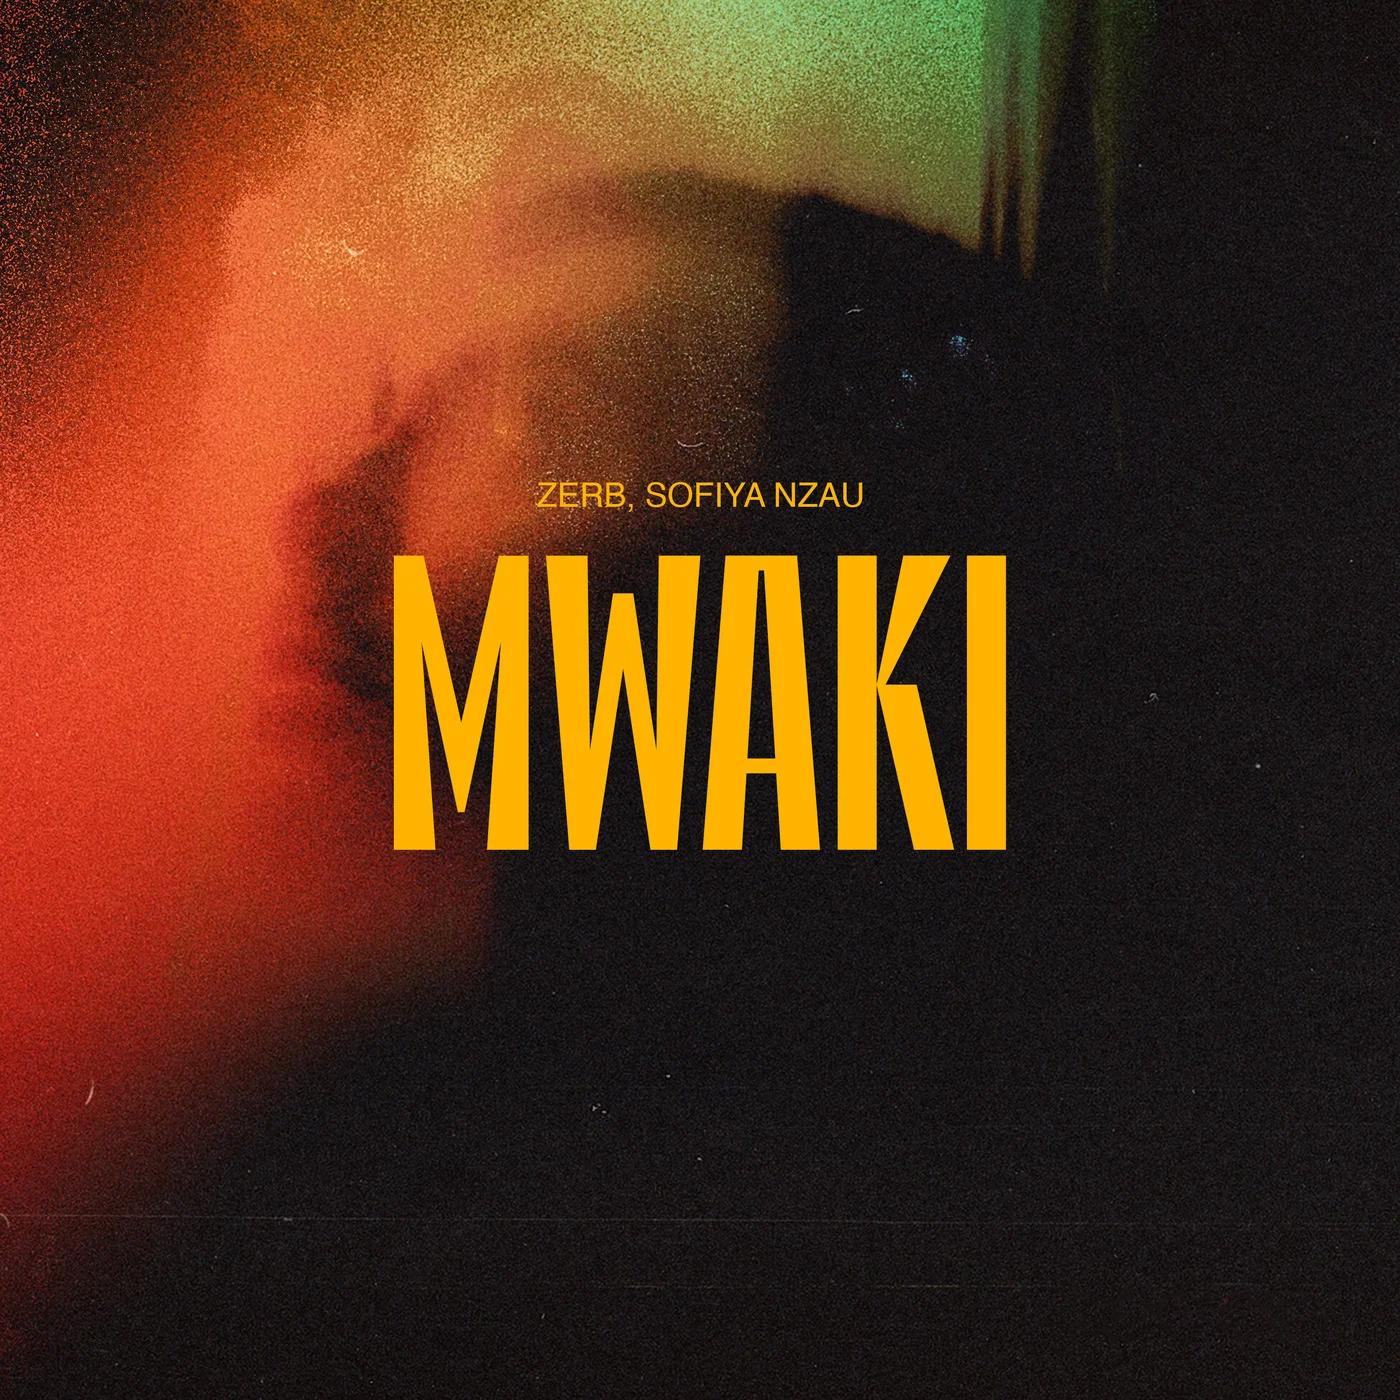 Zerb - Mwaki Feat Sofiya Nzau - Testo e Traduzione